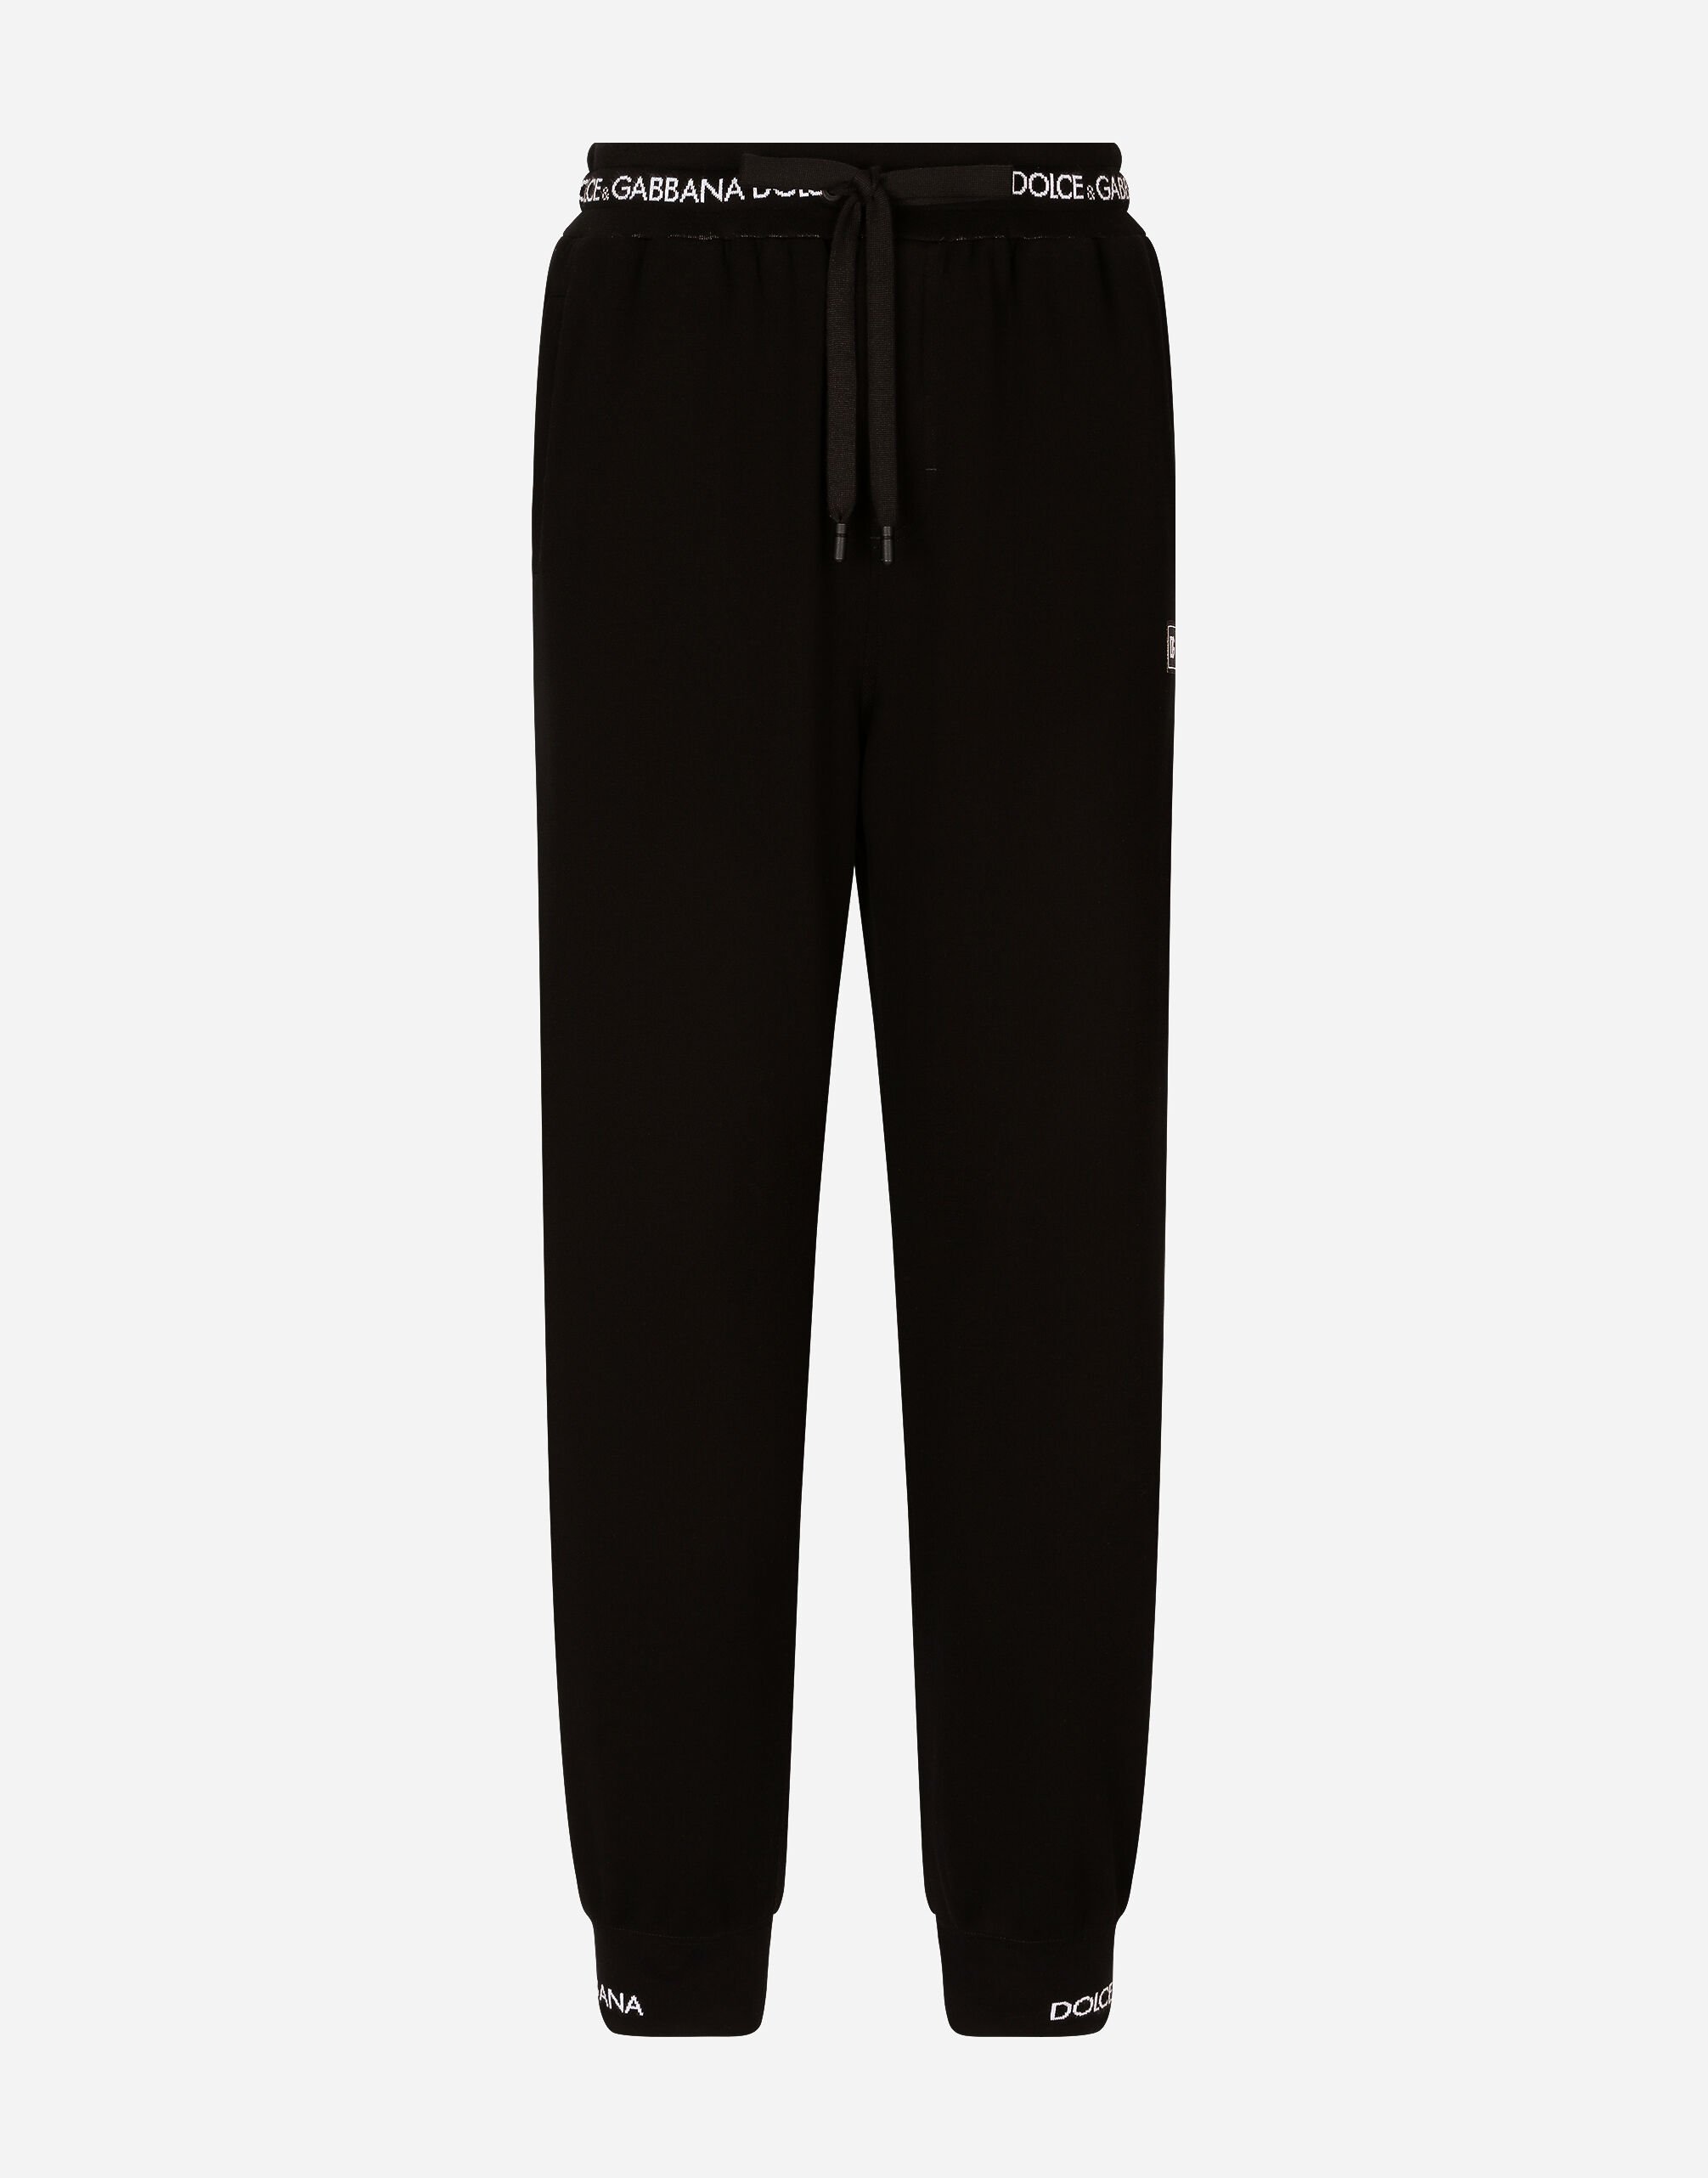 Dolce & Gabbana Cotton jogging pants with logo print Black G8PN9TG7K1V